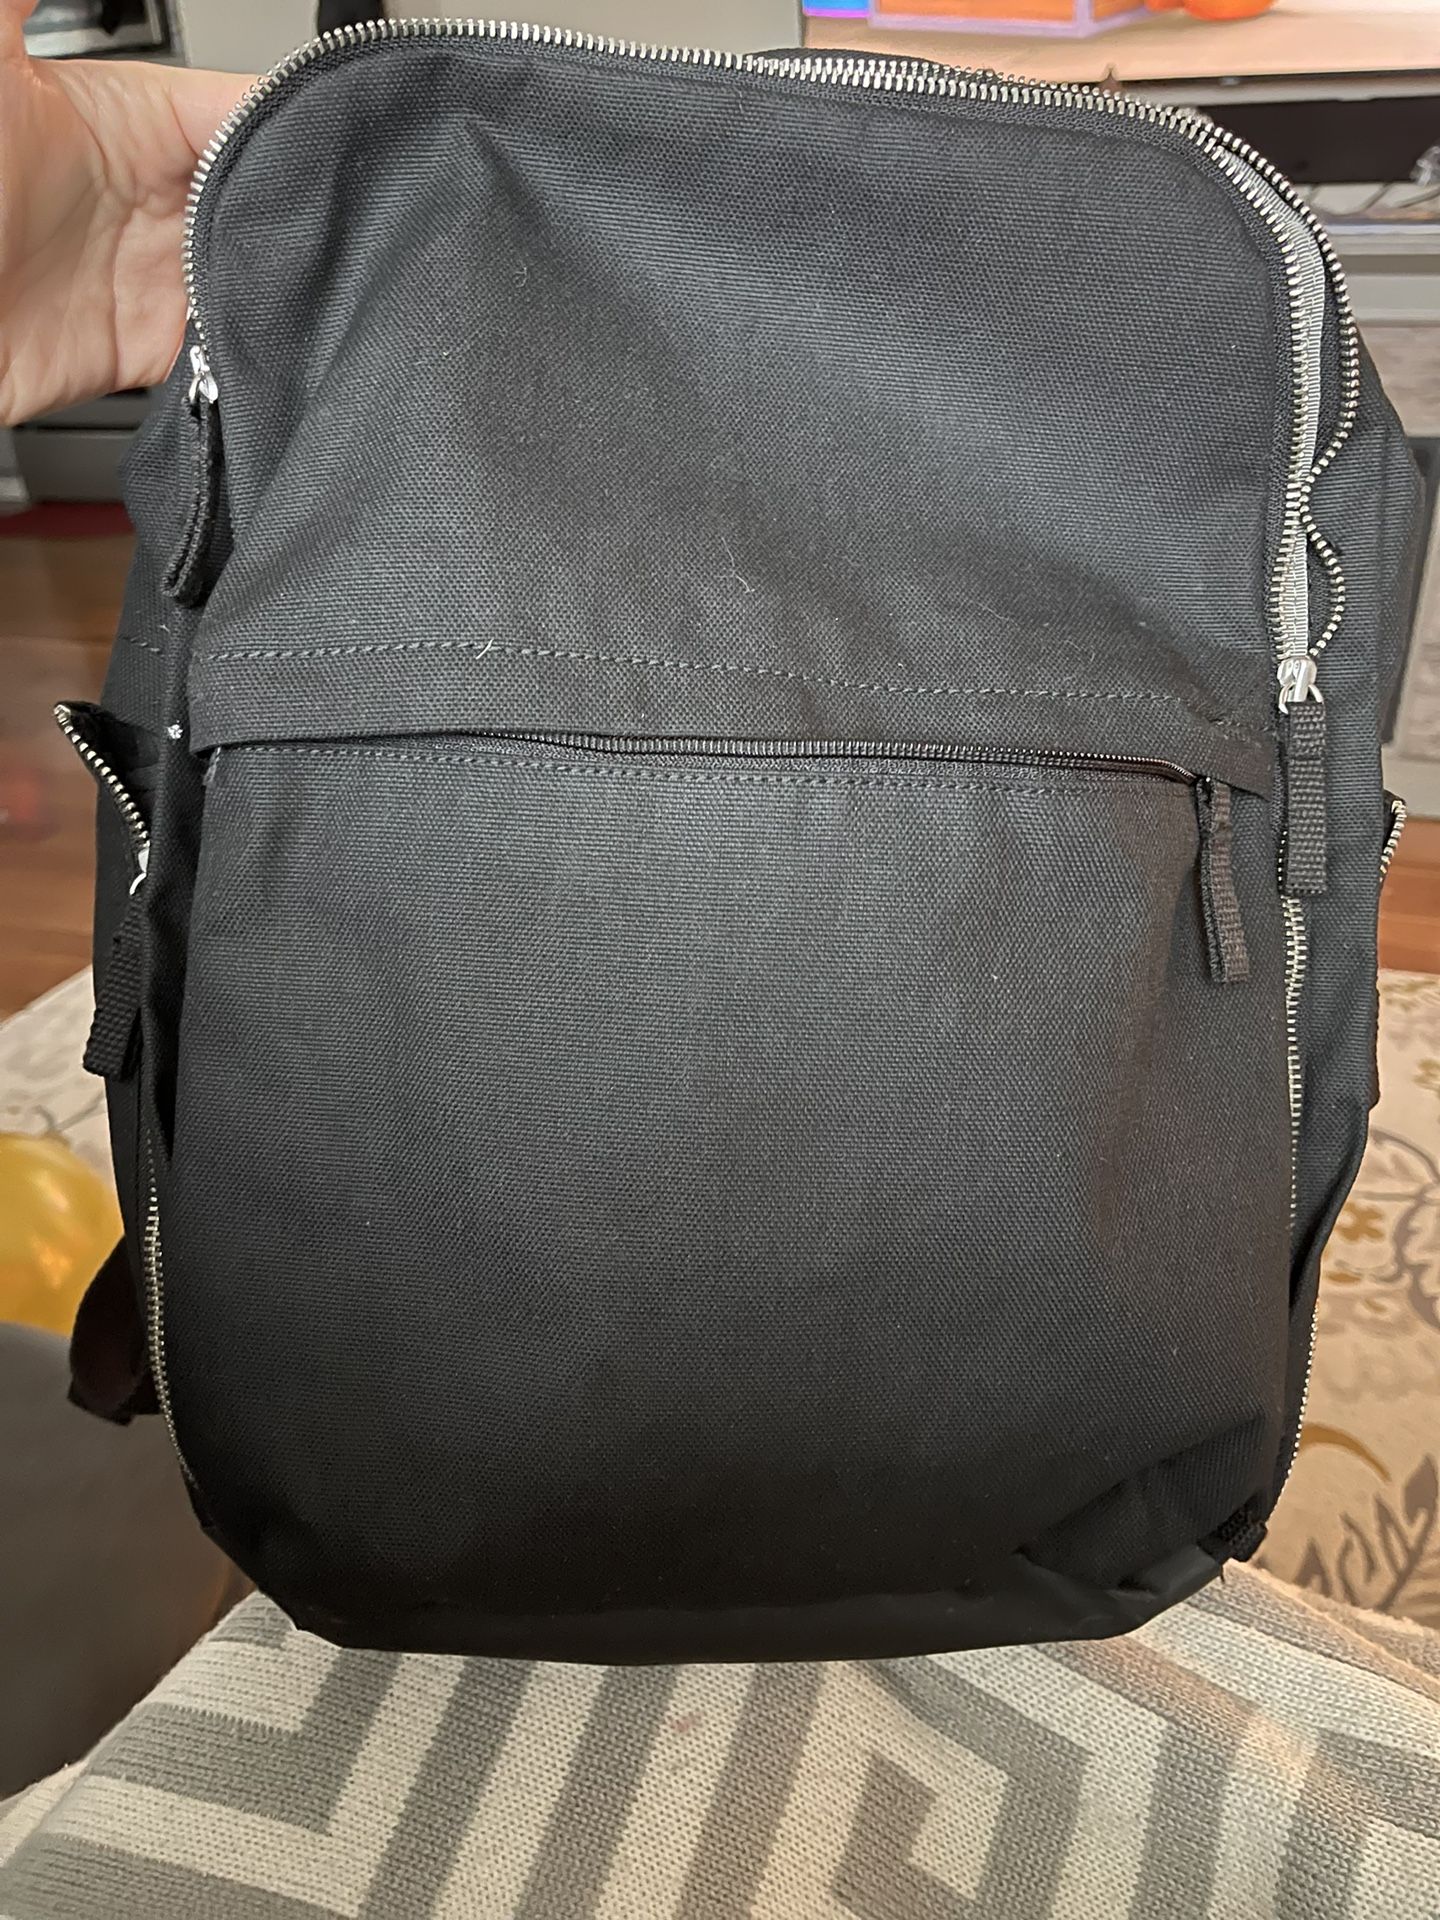 IKEA Laptop Backpack